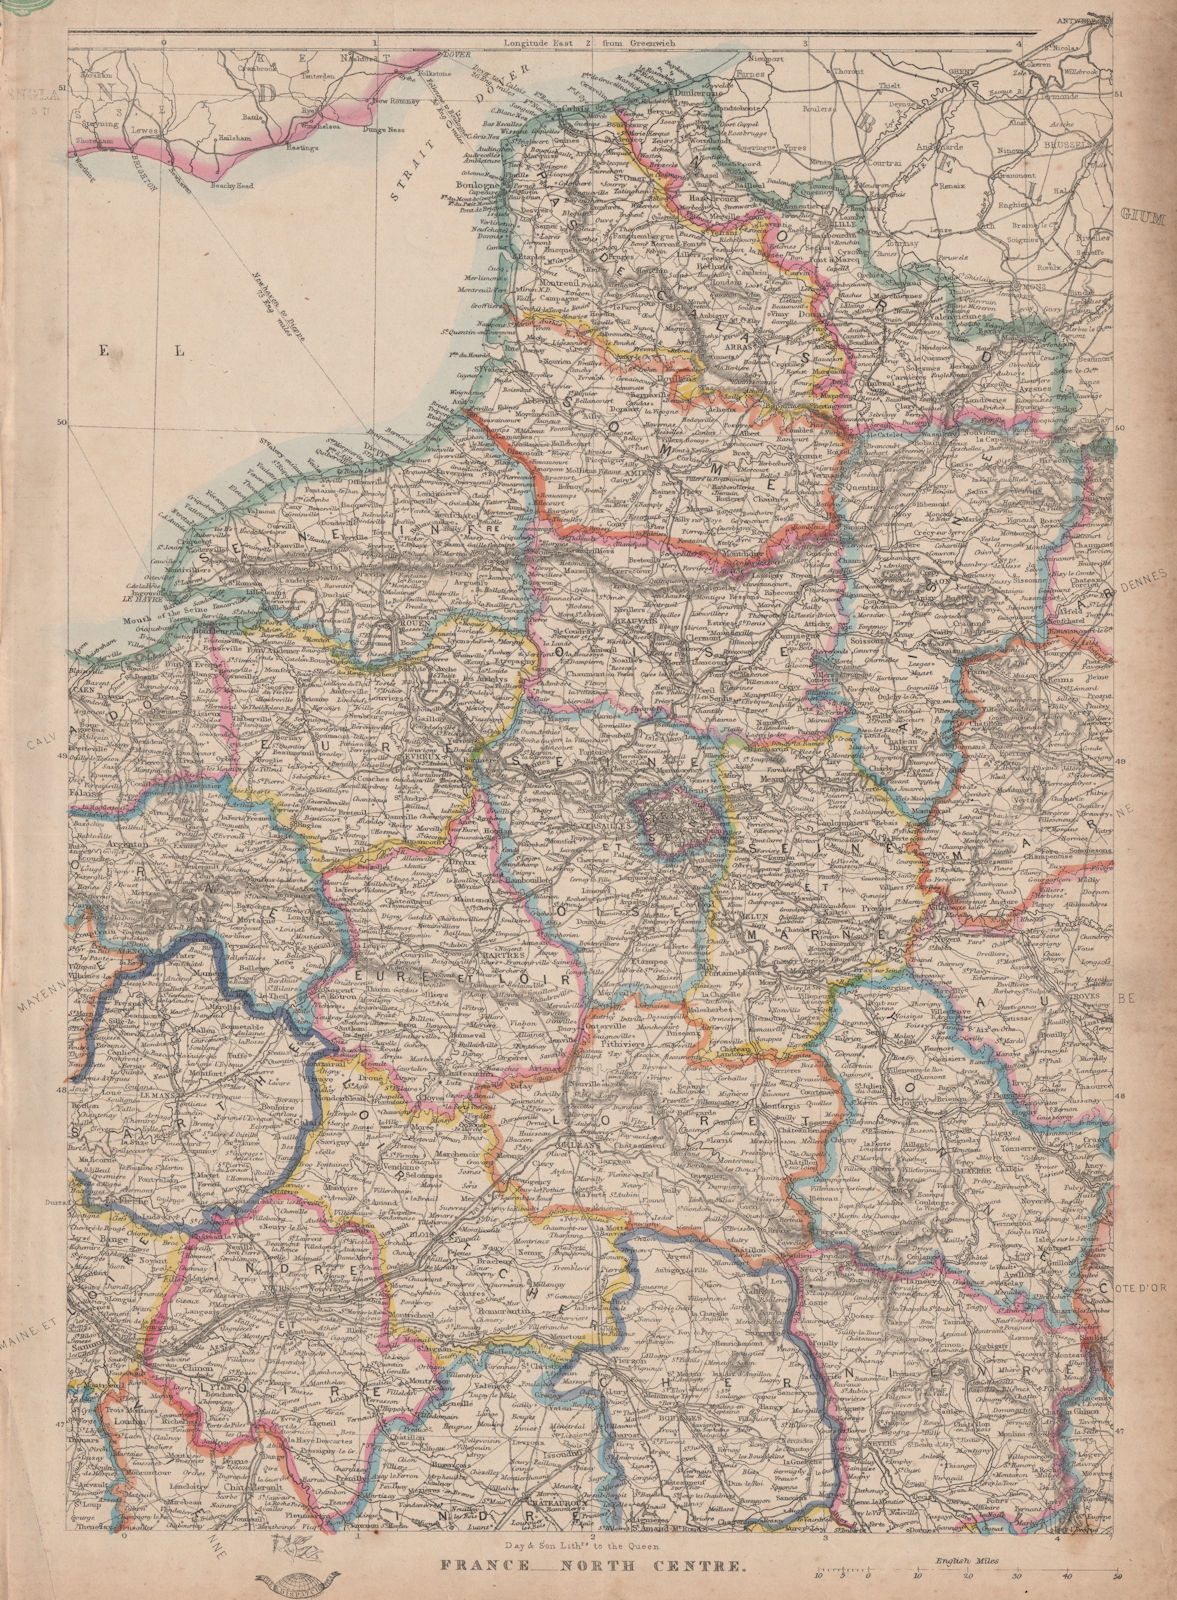 FRANCE NORTH CENTRE. Picardy Normandy Ile de France Bourgogne.JW LOWRY 1863 map